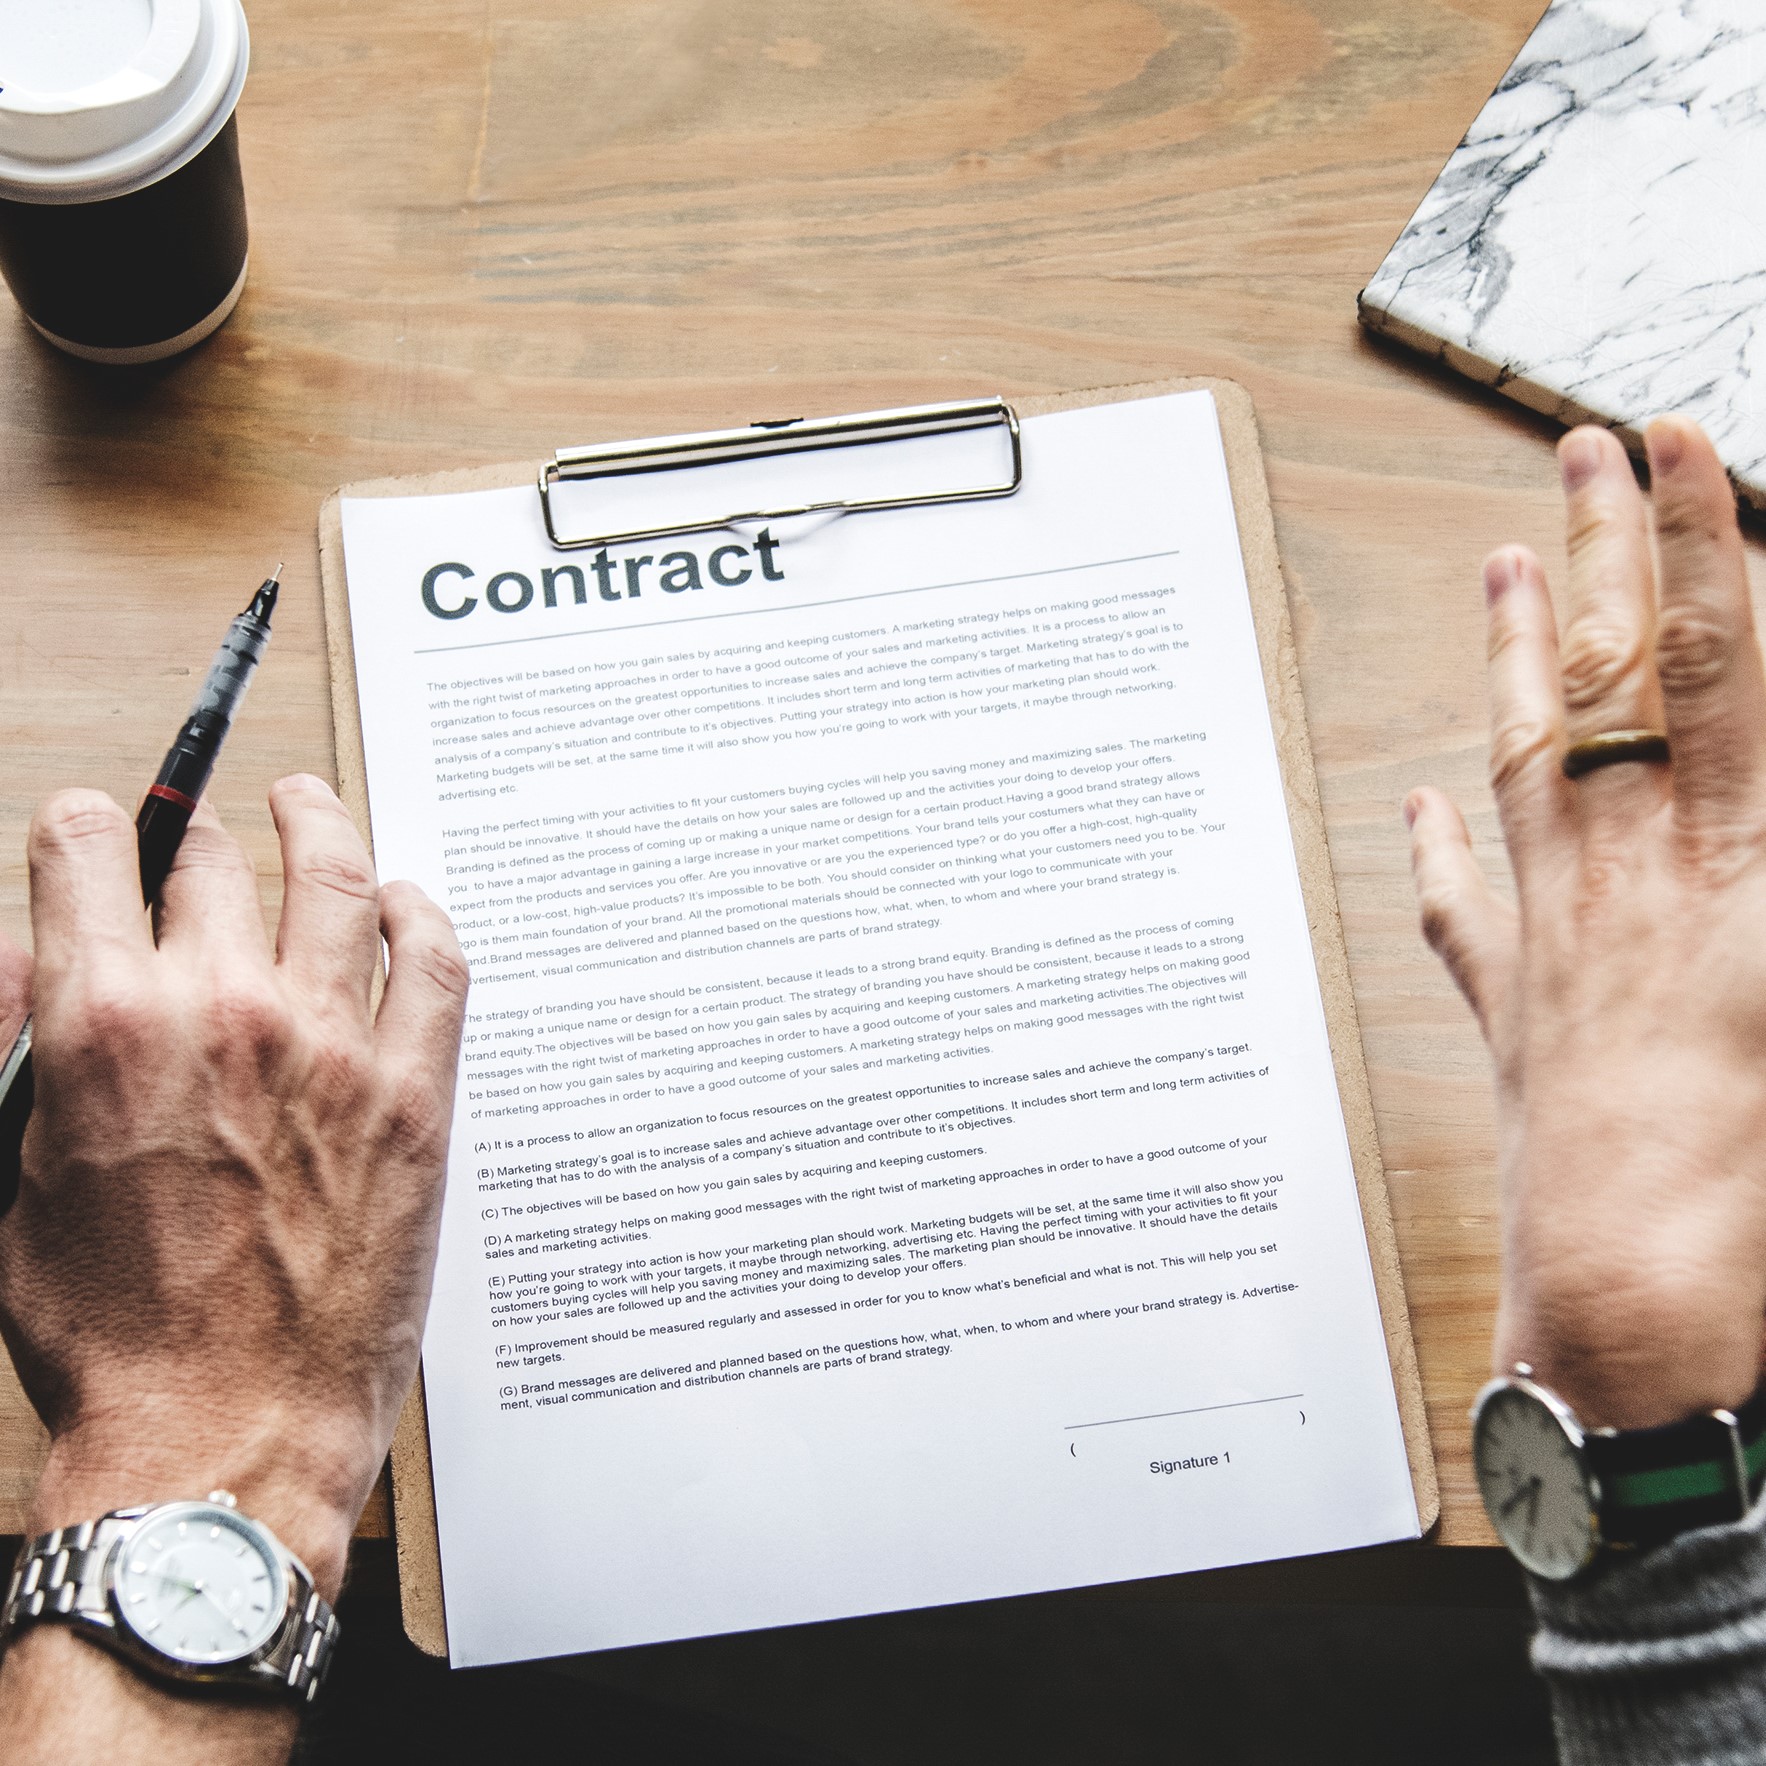 Contract negotiation skills